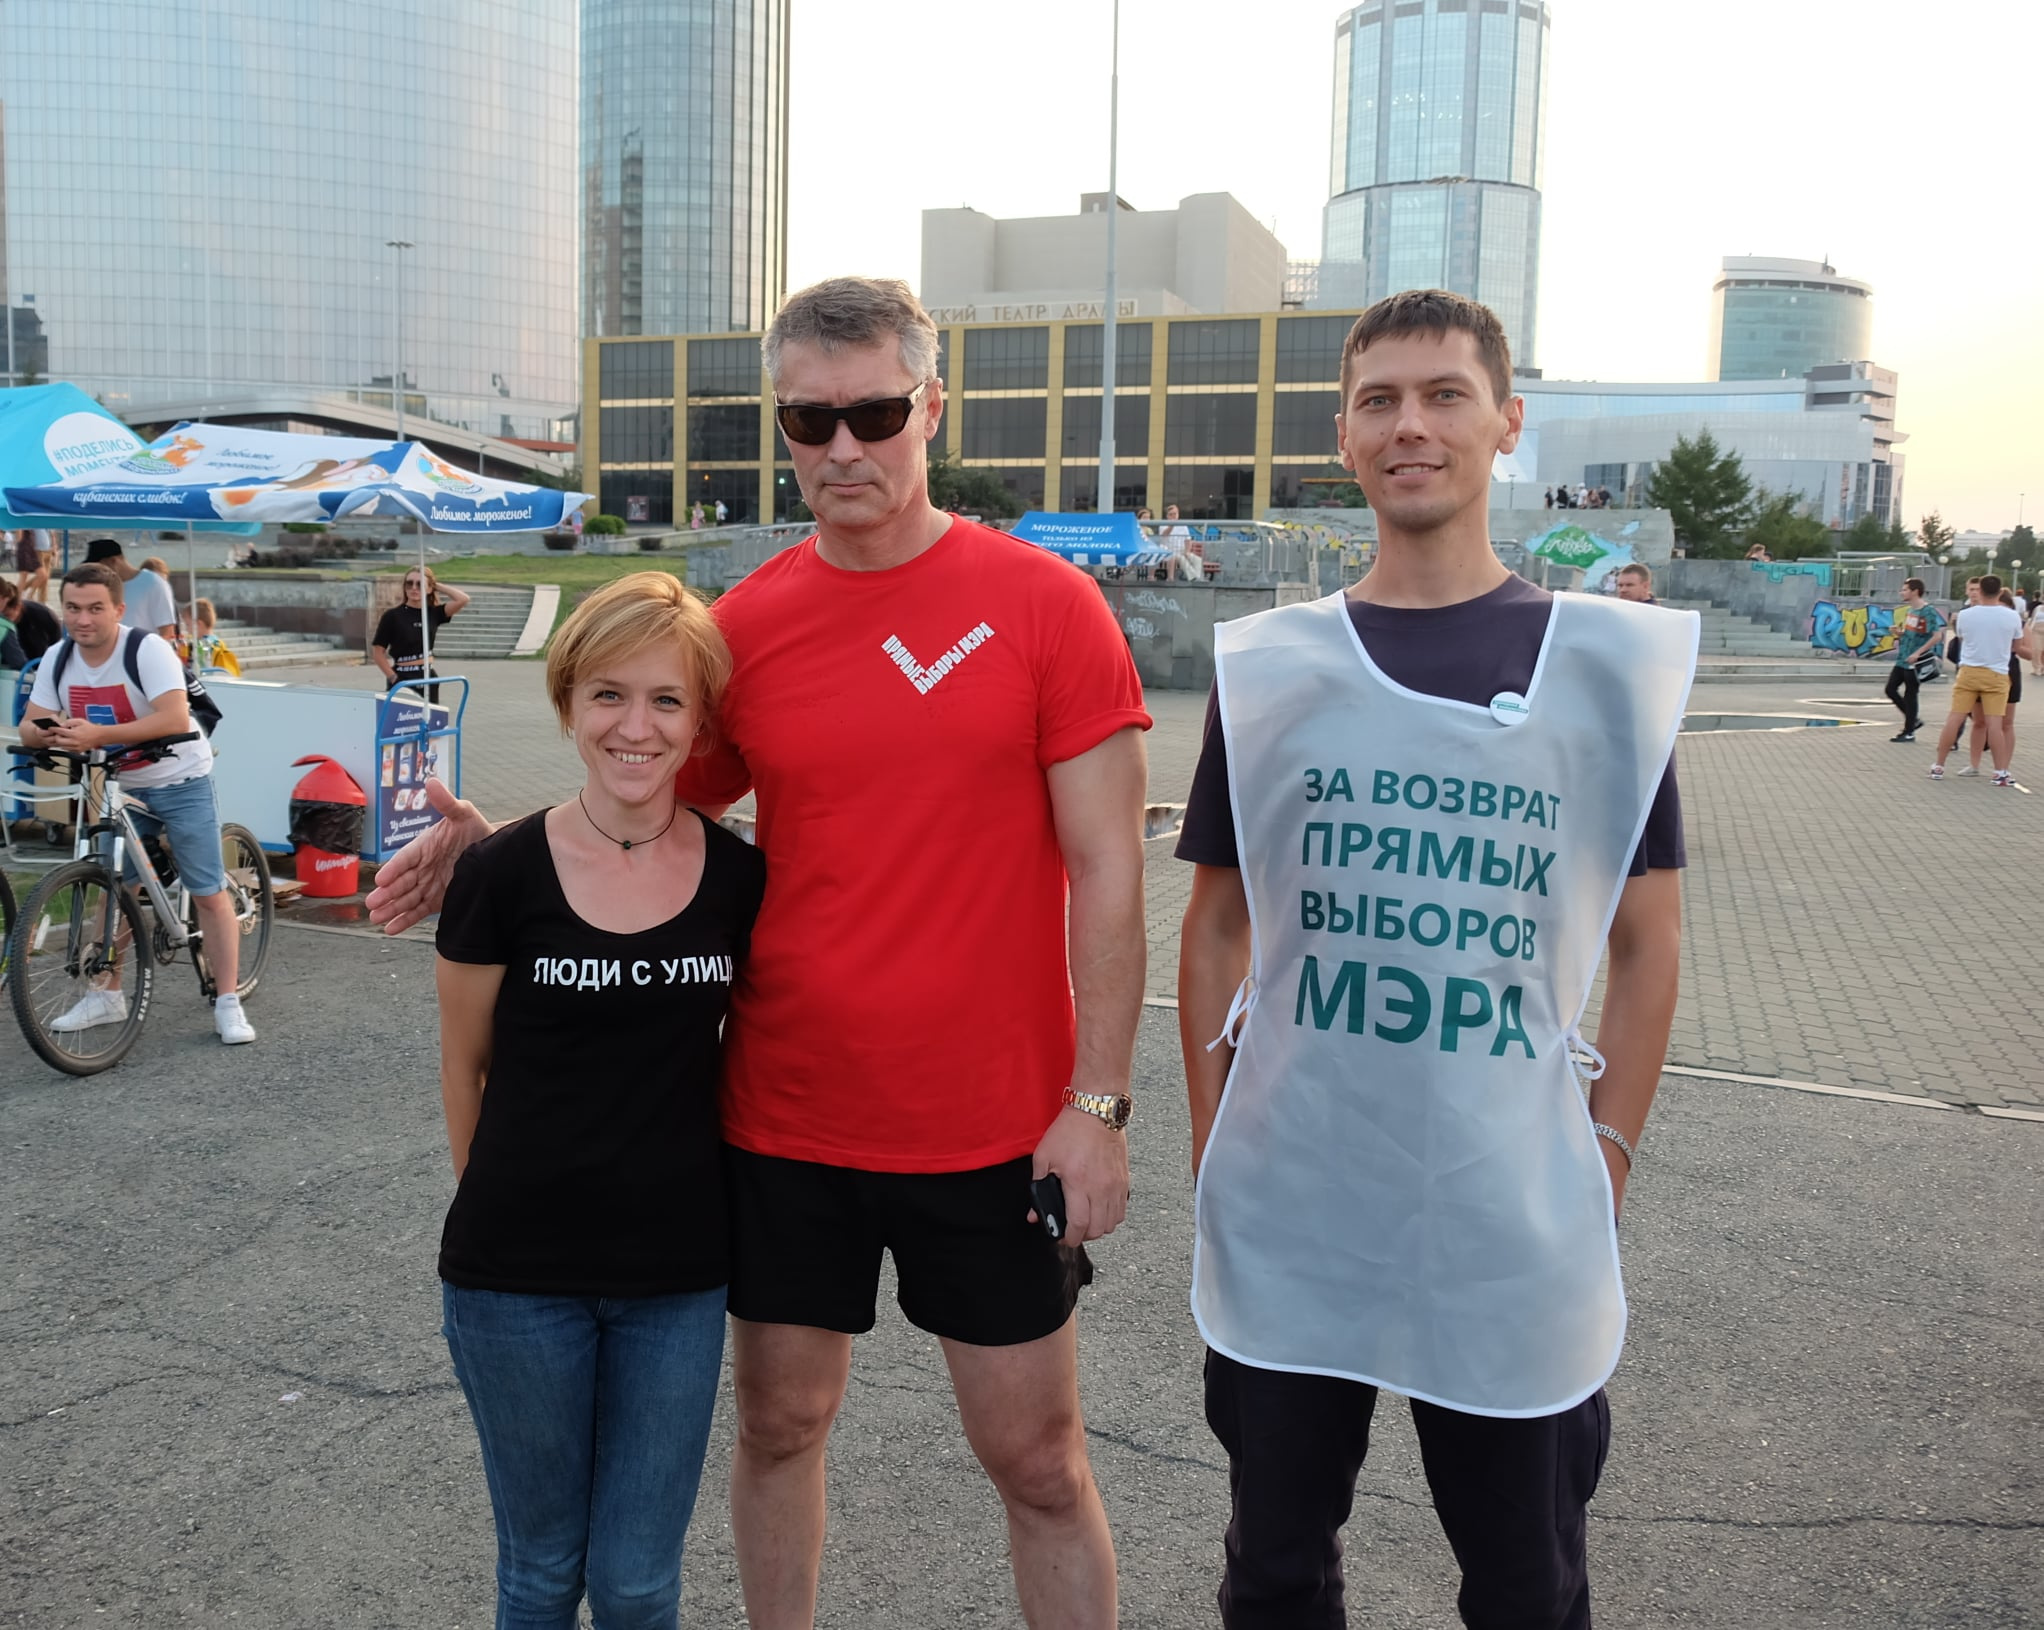 Народную инициативу поддержал экс-мэр Екатеринбурга Евгений Ройзман